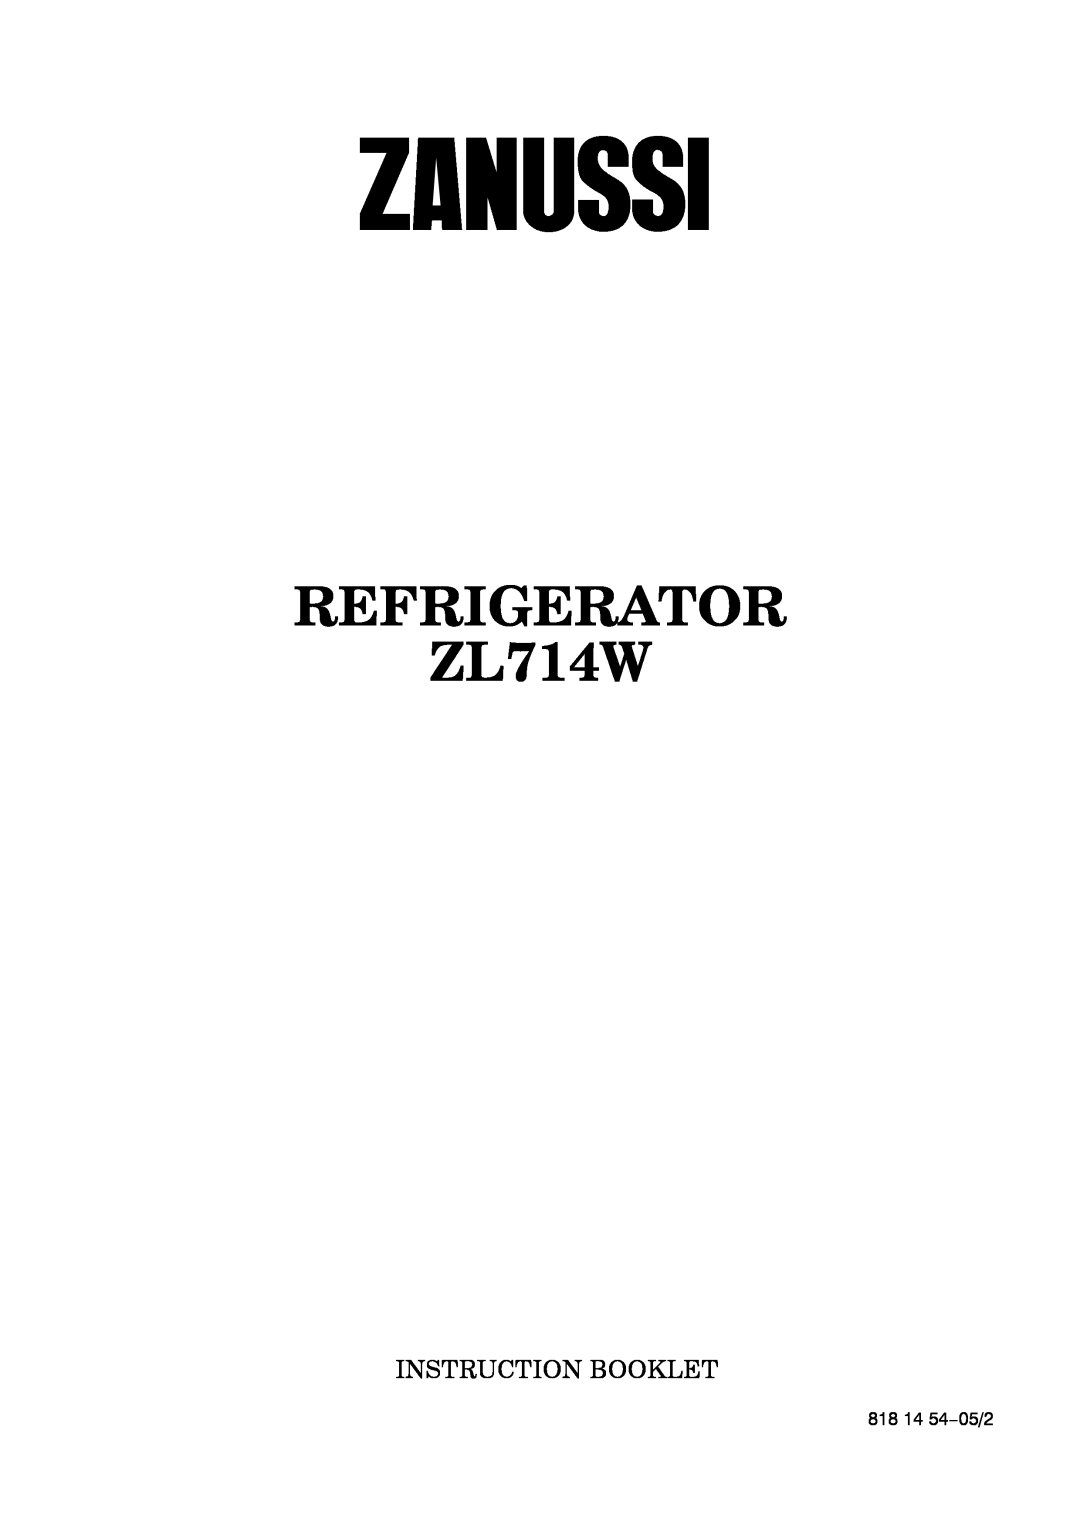 Zanussi manual REFRIGERATOR ZL714W, Instruction Booklet, 818 14 54--05/2 